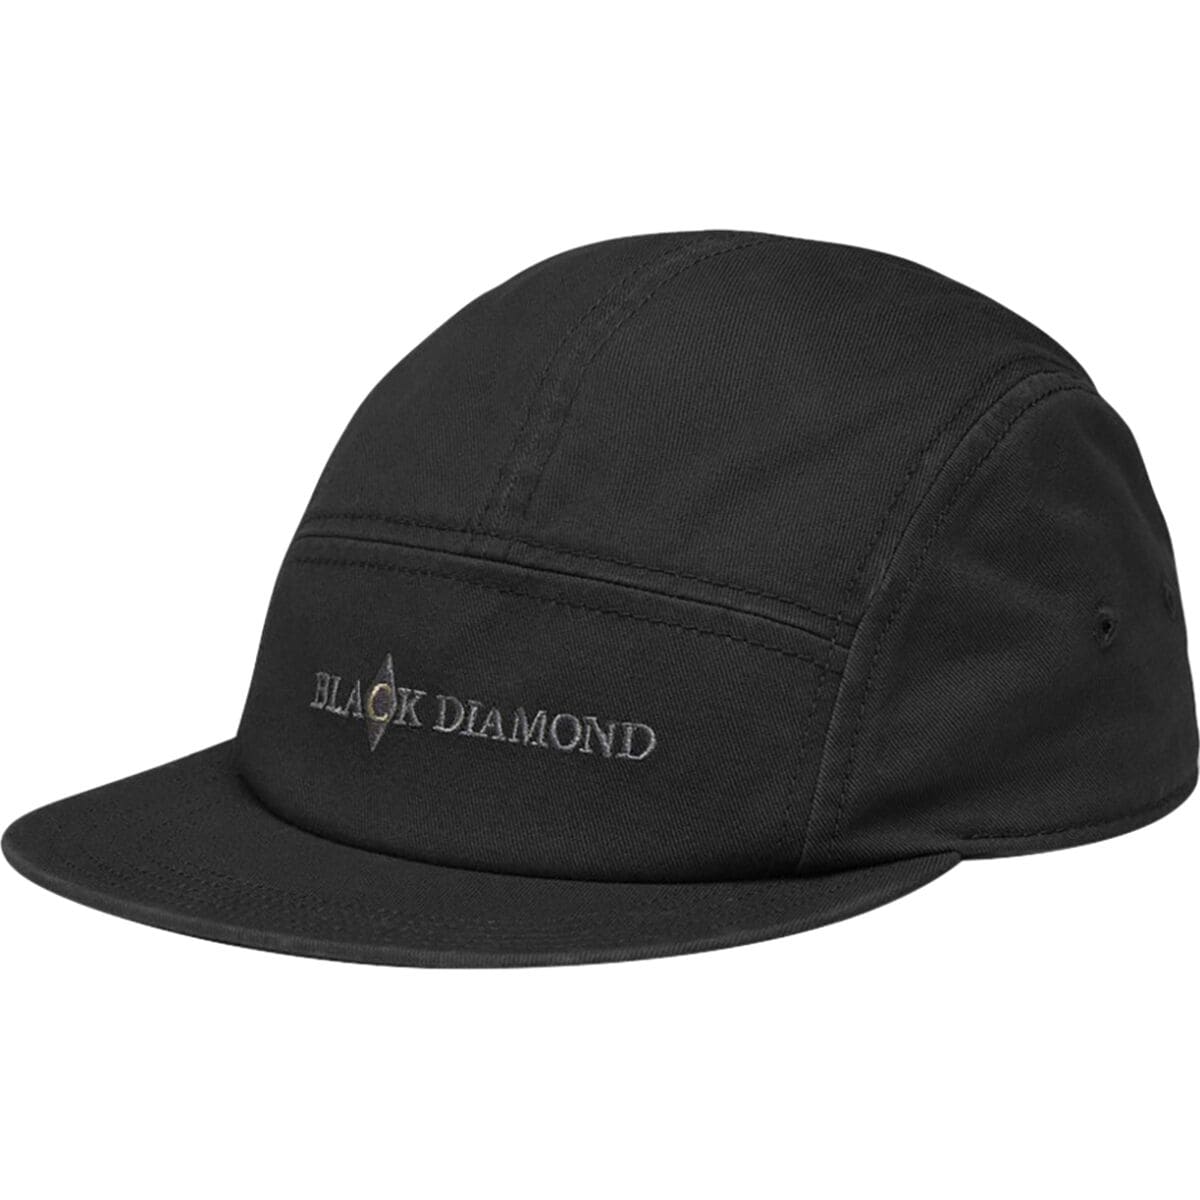 Кэмпер кепка Black Diamond, цвет black/steel grey